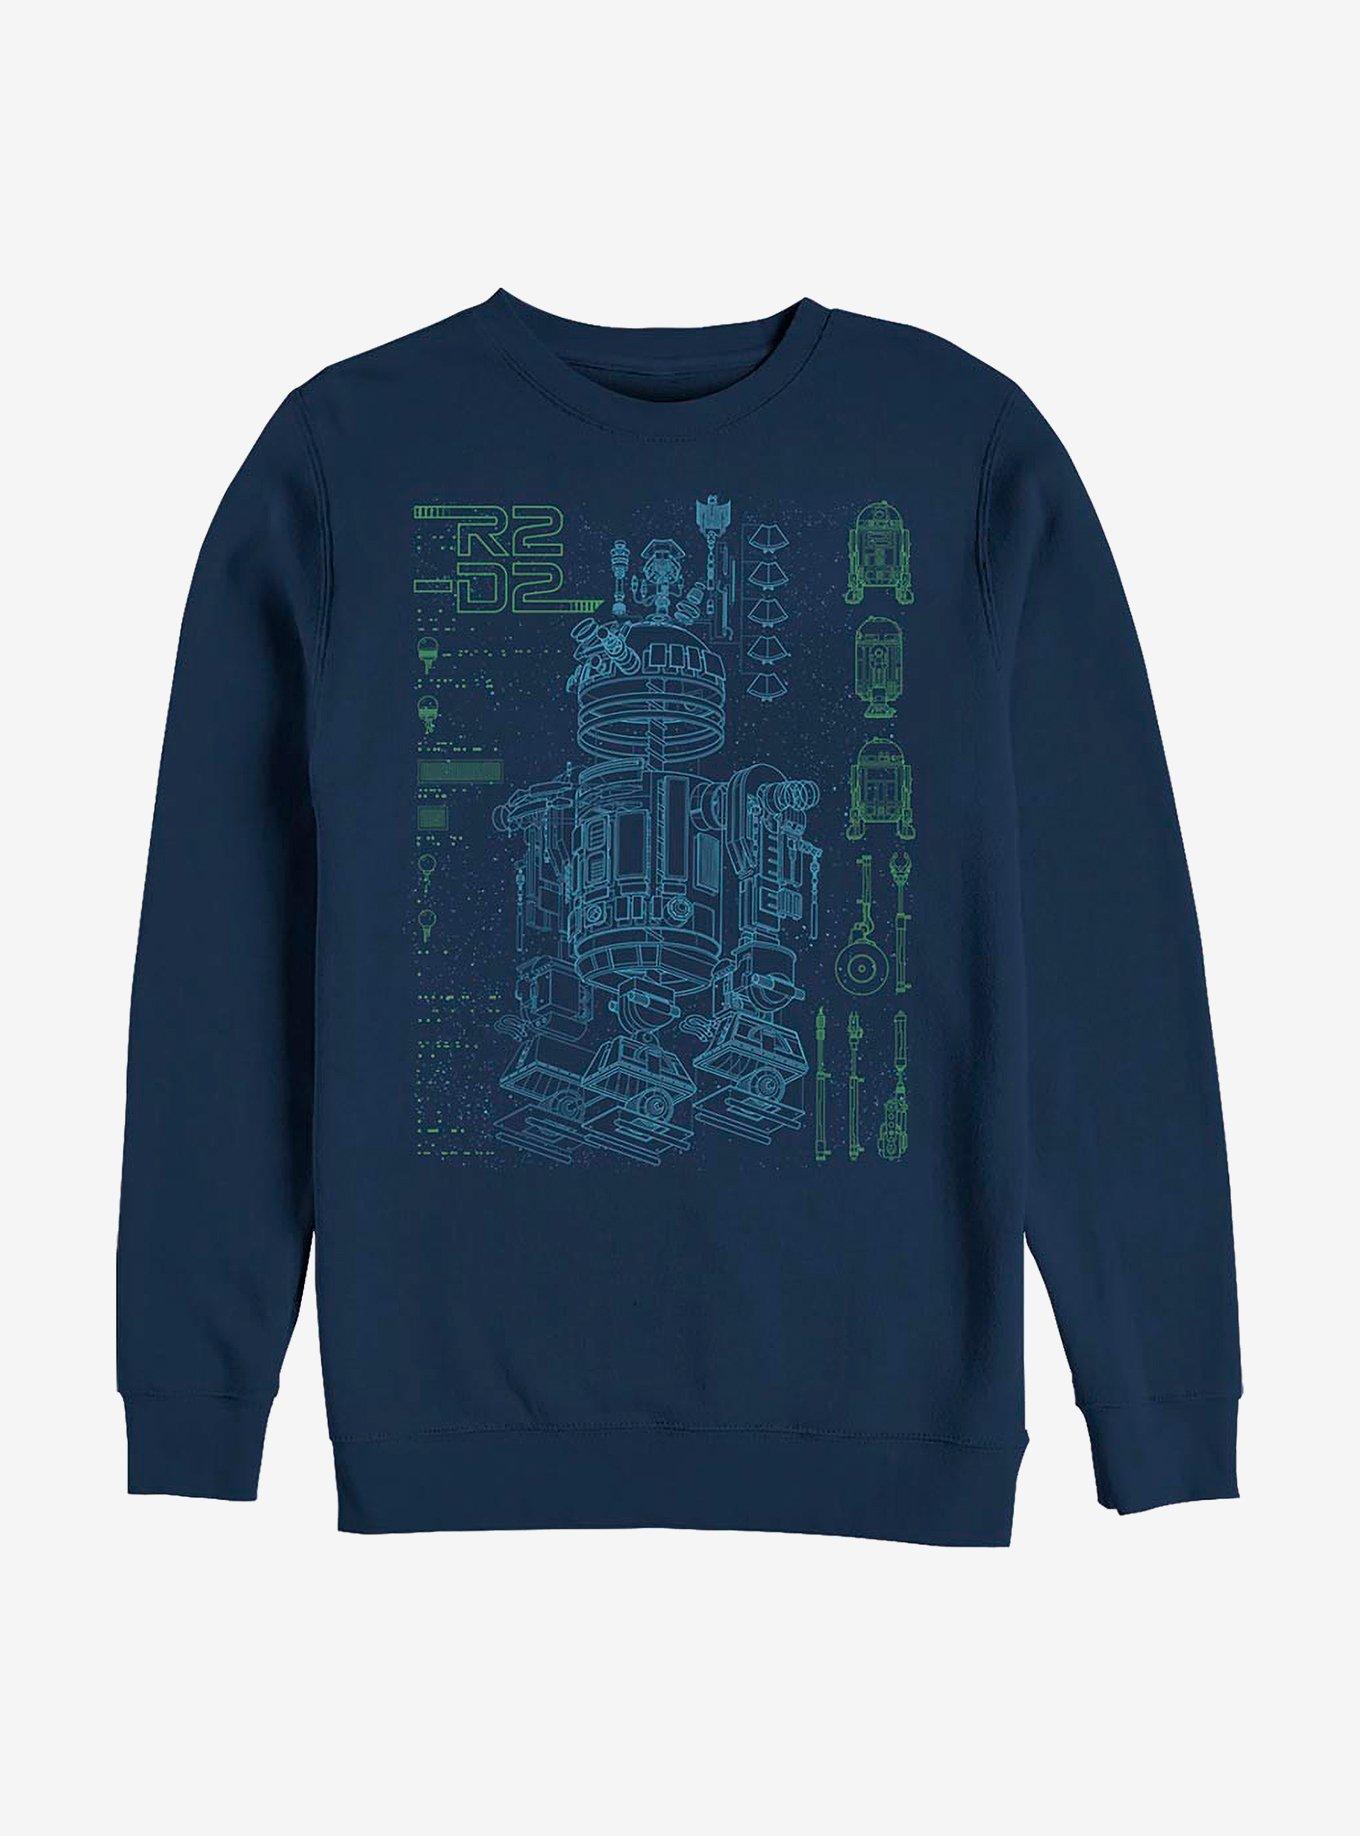 Star Wars Inside R2-D2 Crew Sweatshirt